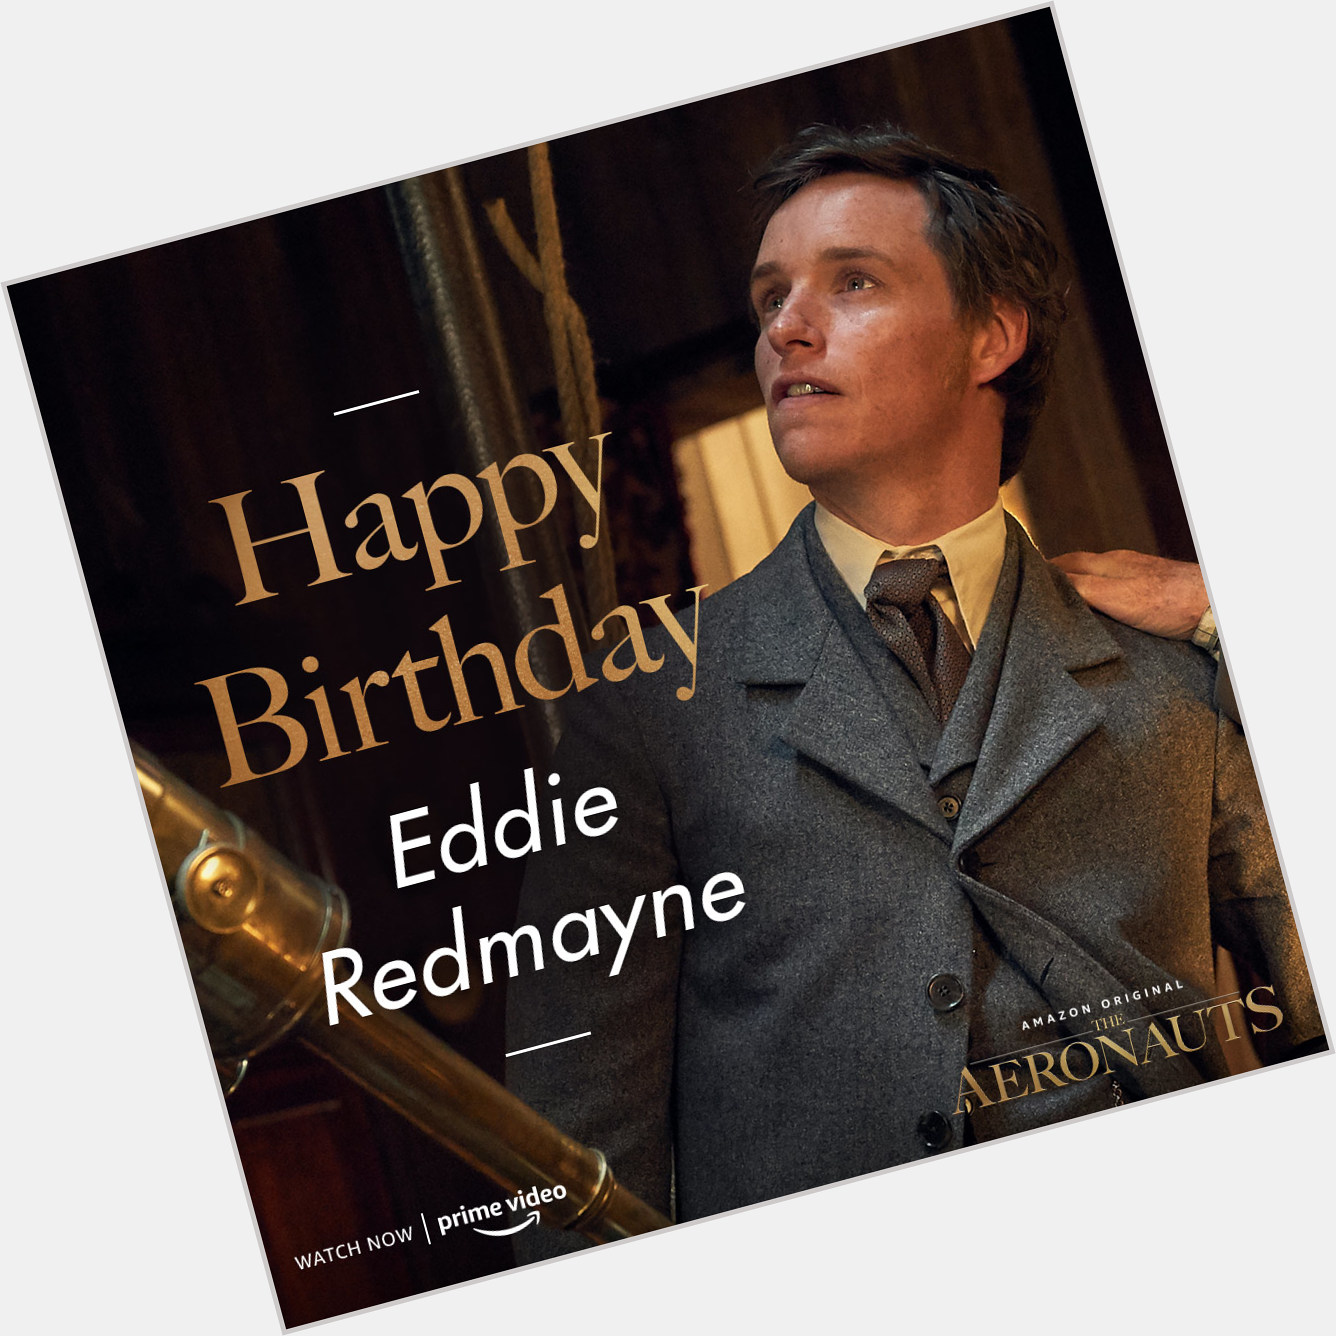 Happy Birthday to our very own Mr. Glaisher, Eddie Redmayne. 